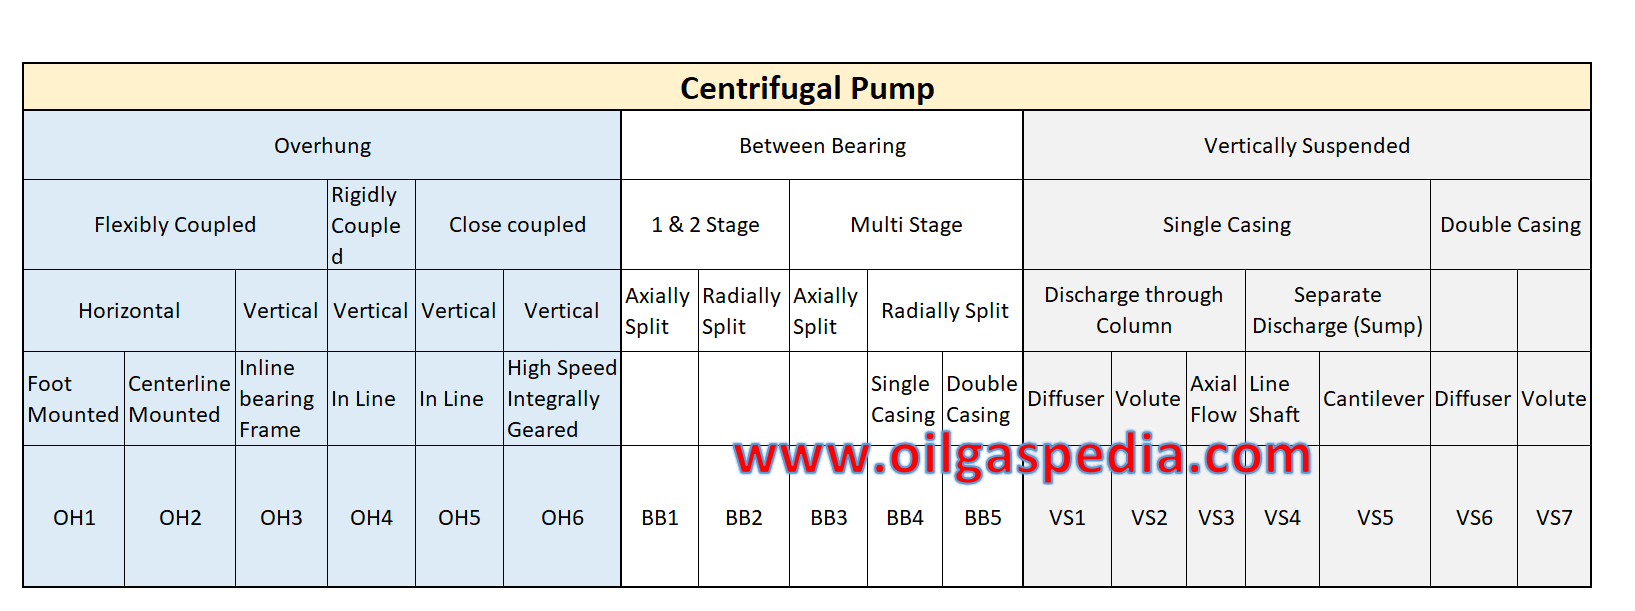 Centrifugal Pump Type